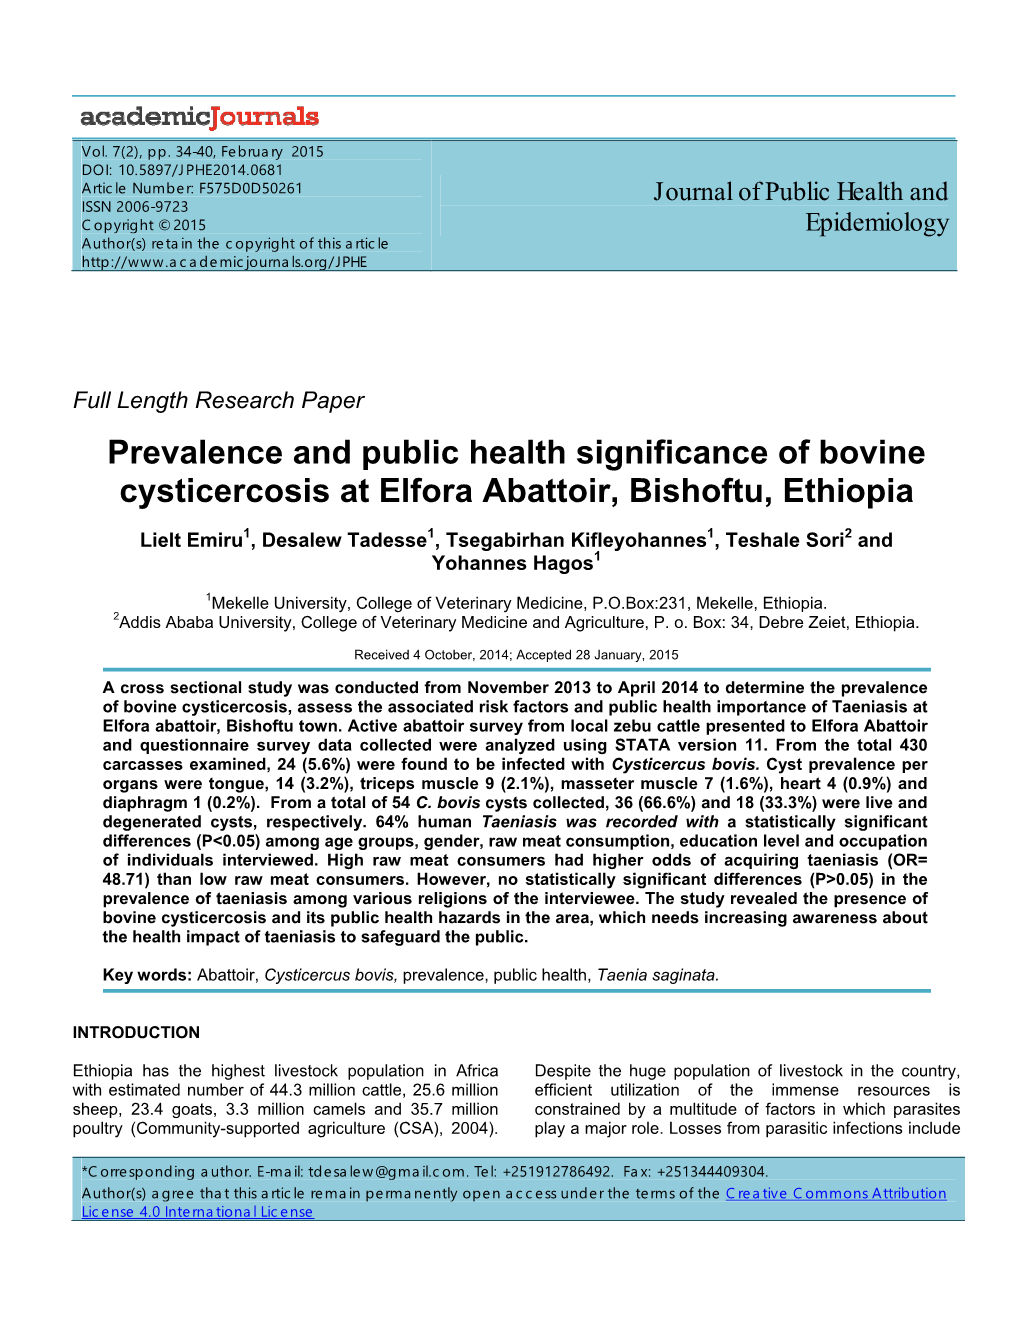 Prevalence and Public Health Significance of Bovine Cysticercosis at Elfora Abattoir, Bishoftu, Ethiopia